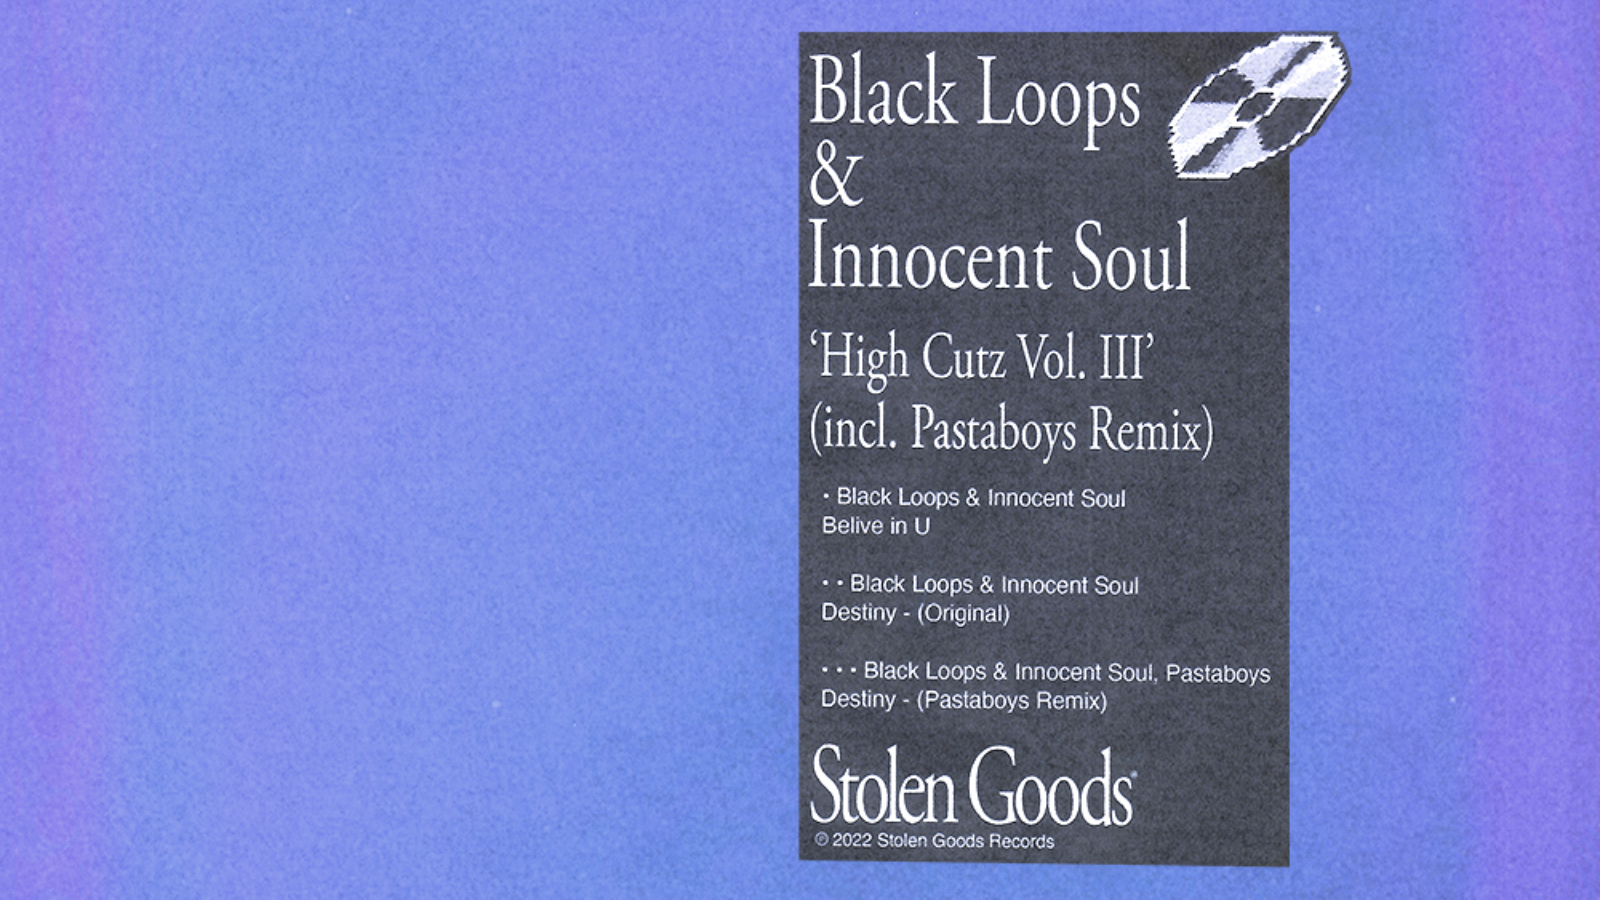 PACK SHOT - Black Loops & Innocent Soul - High Cutz Vol. III (incl. Pastaboys Remix) - Stolen Goods Records